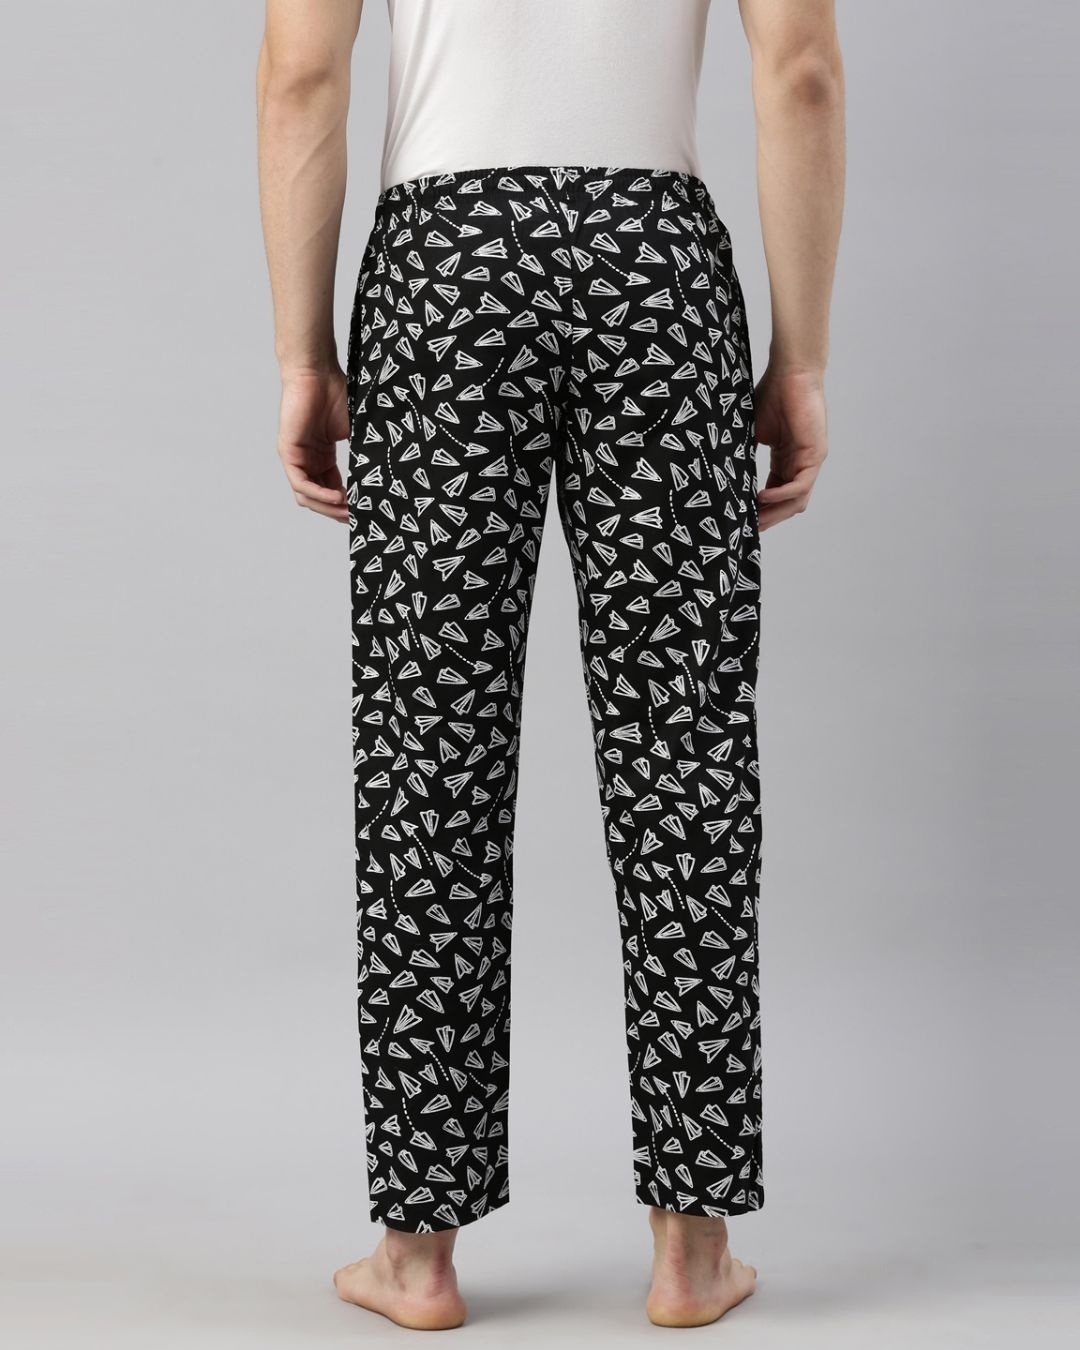 Shop Men's Black All Over Printed Cotton Pyjamas-Design